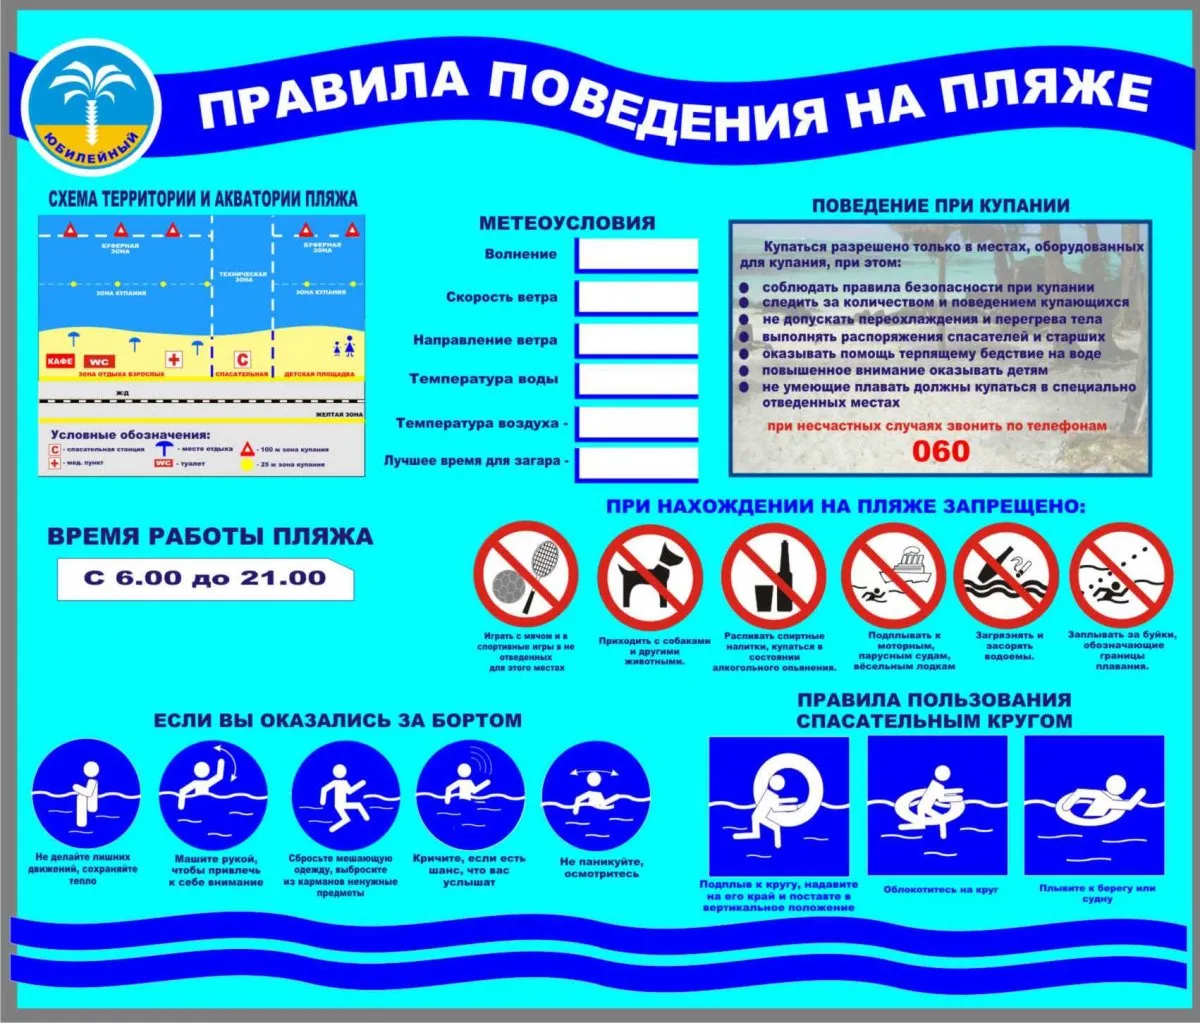 Знаки чтобы не было воды. Знаки безопасности на воде. Знаки у водоемов. Знаки правил безопасности на воде. Запрещающие знаки у водоемов.